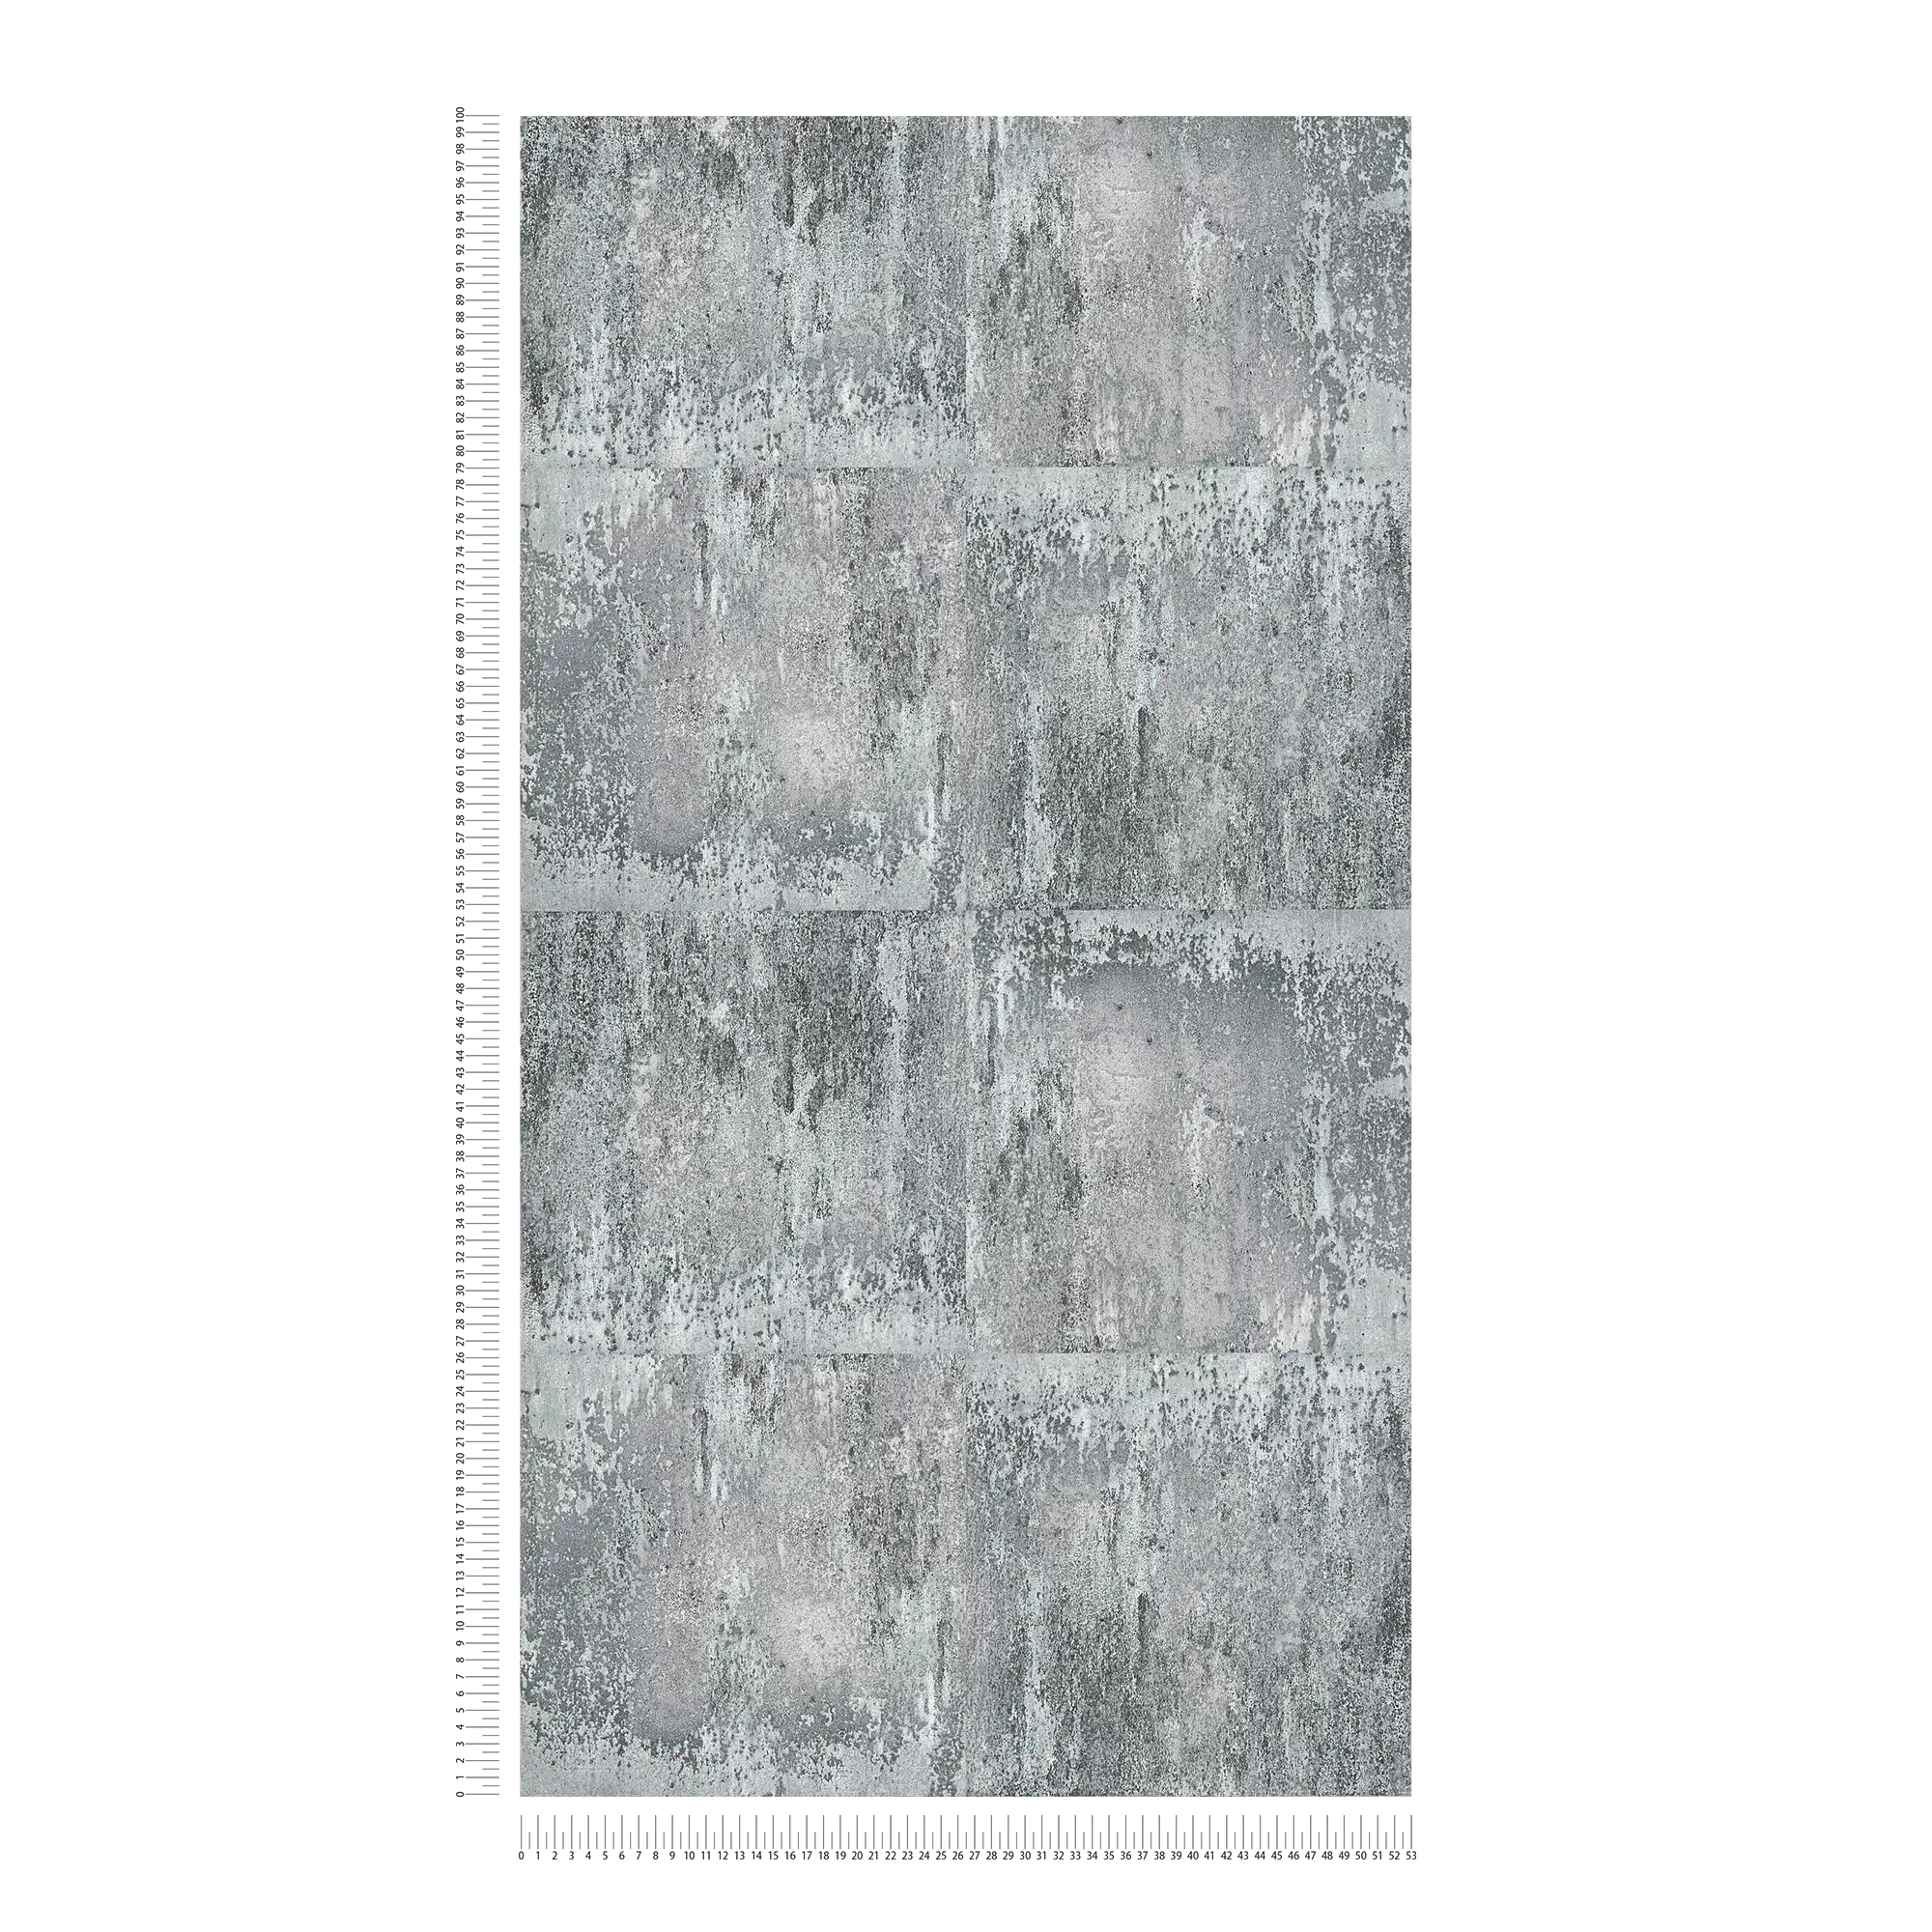             Wallpaper with rustic metal look & rough pattern - grey, black, silver
        